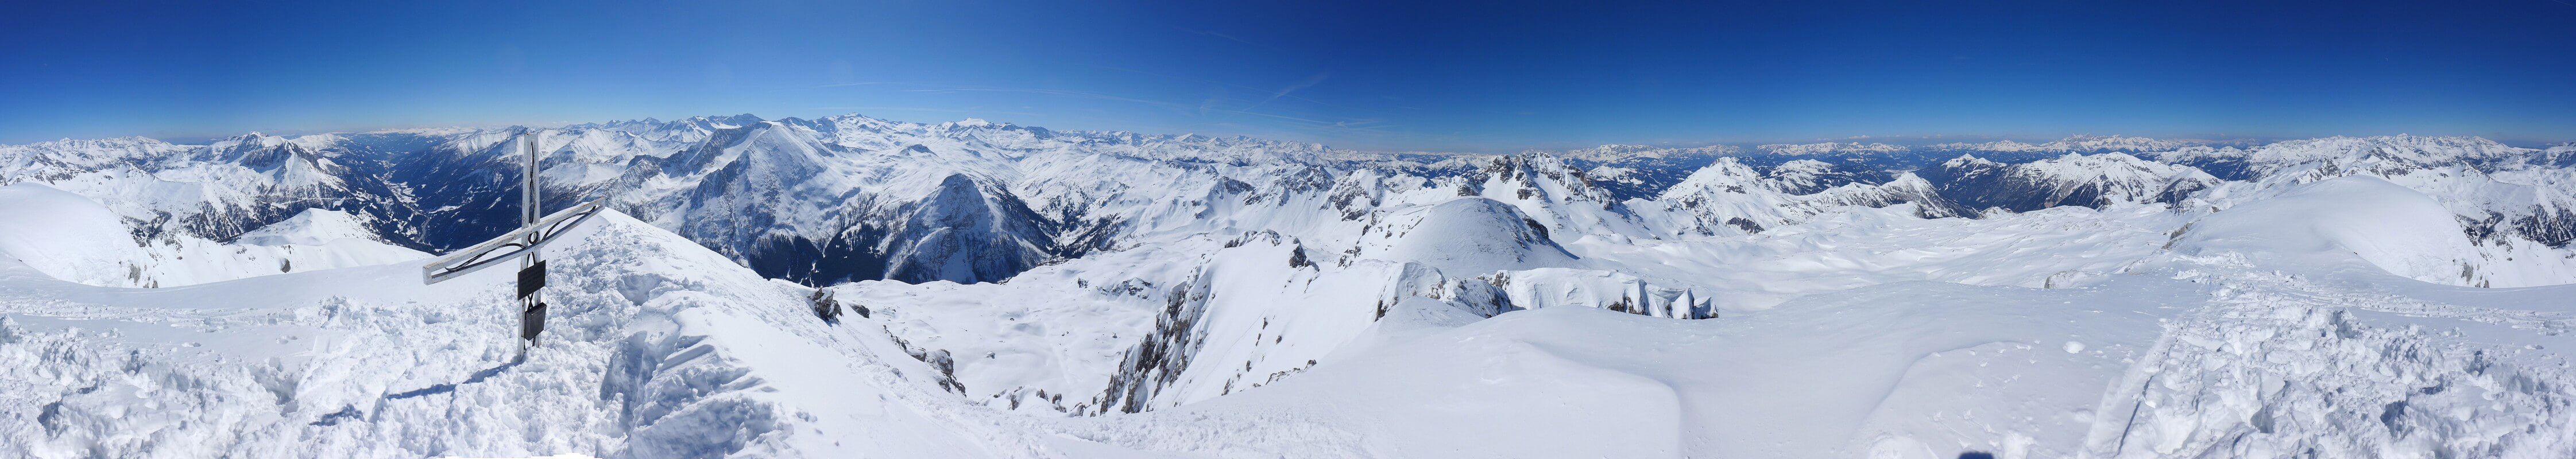 Mosermandl Niedere Tauern Rakousko panorama 28